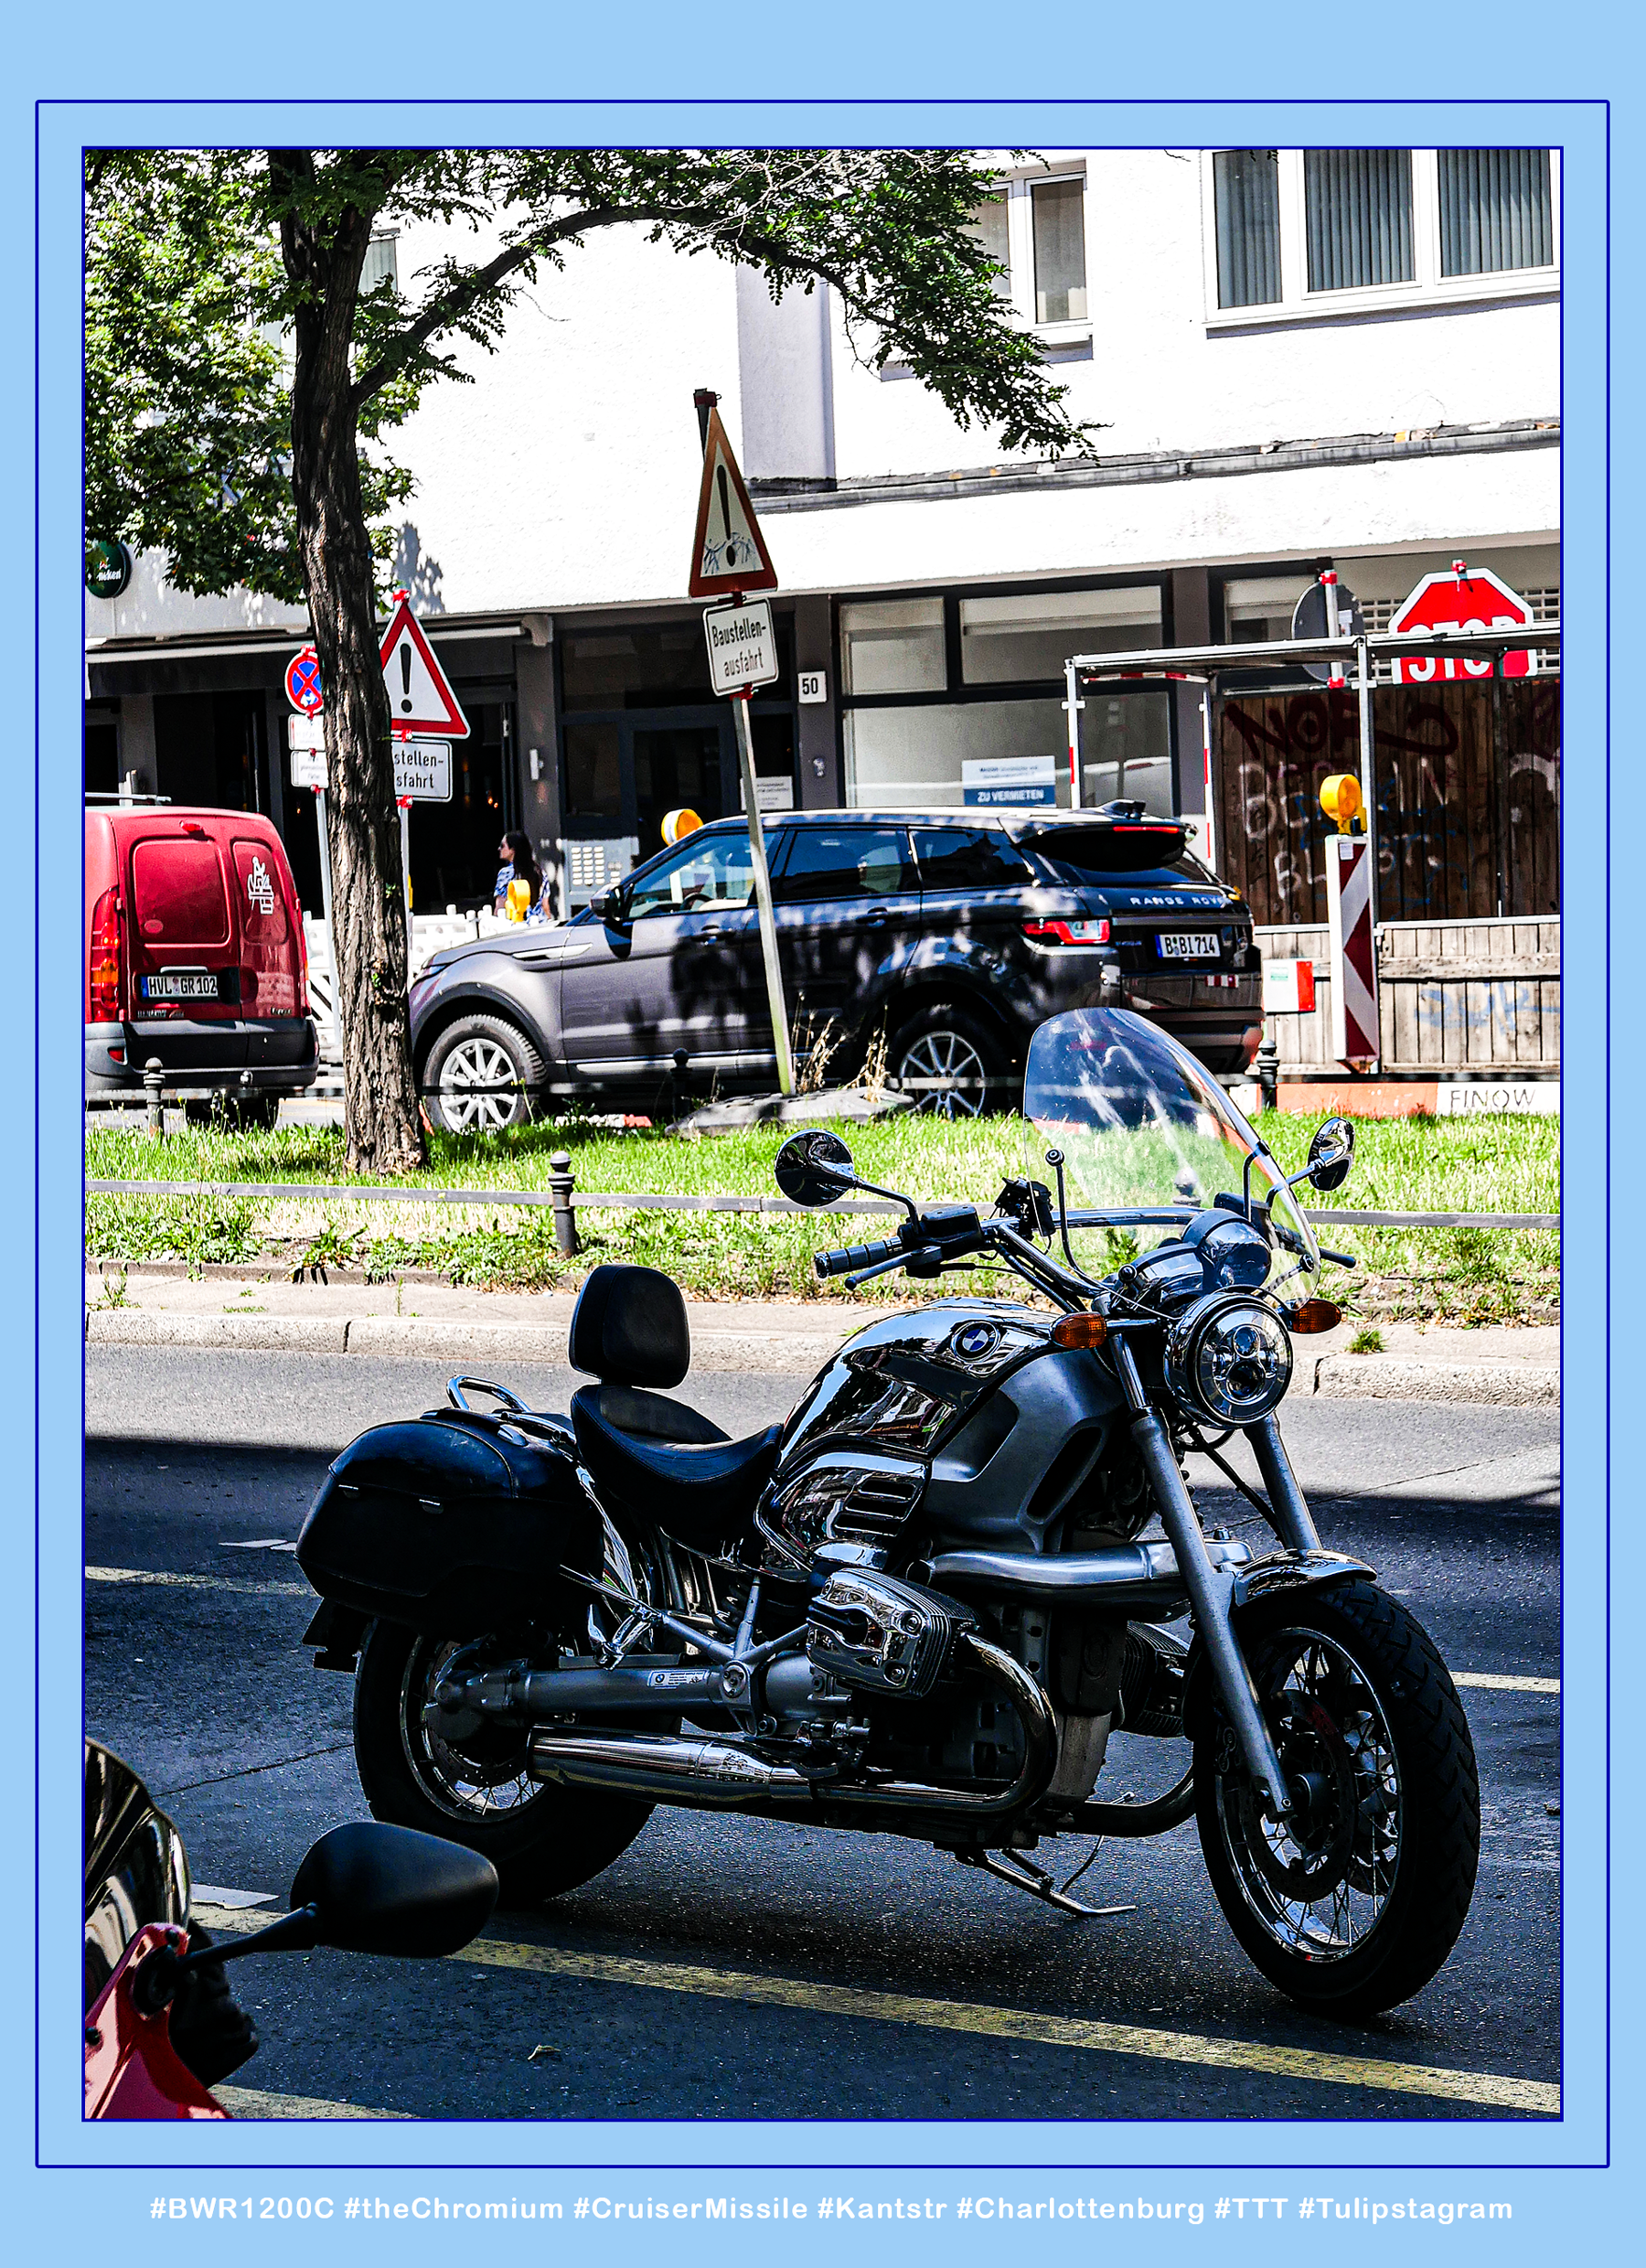 09.07.23 #BMWR1200C #theChromium #CruiserMissile #Kantstr #Charlottenburg #TTT #Tulipstagram